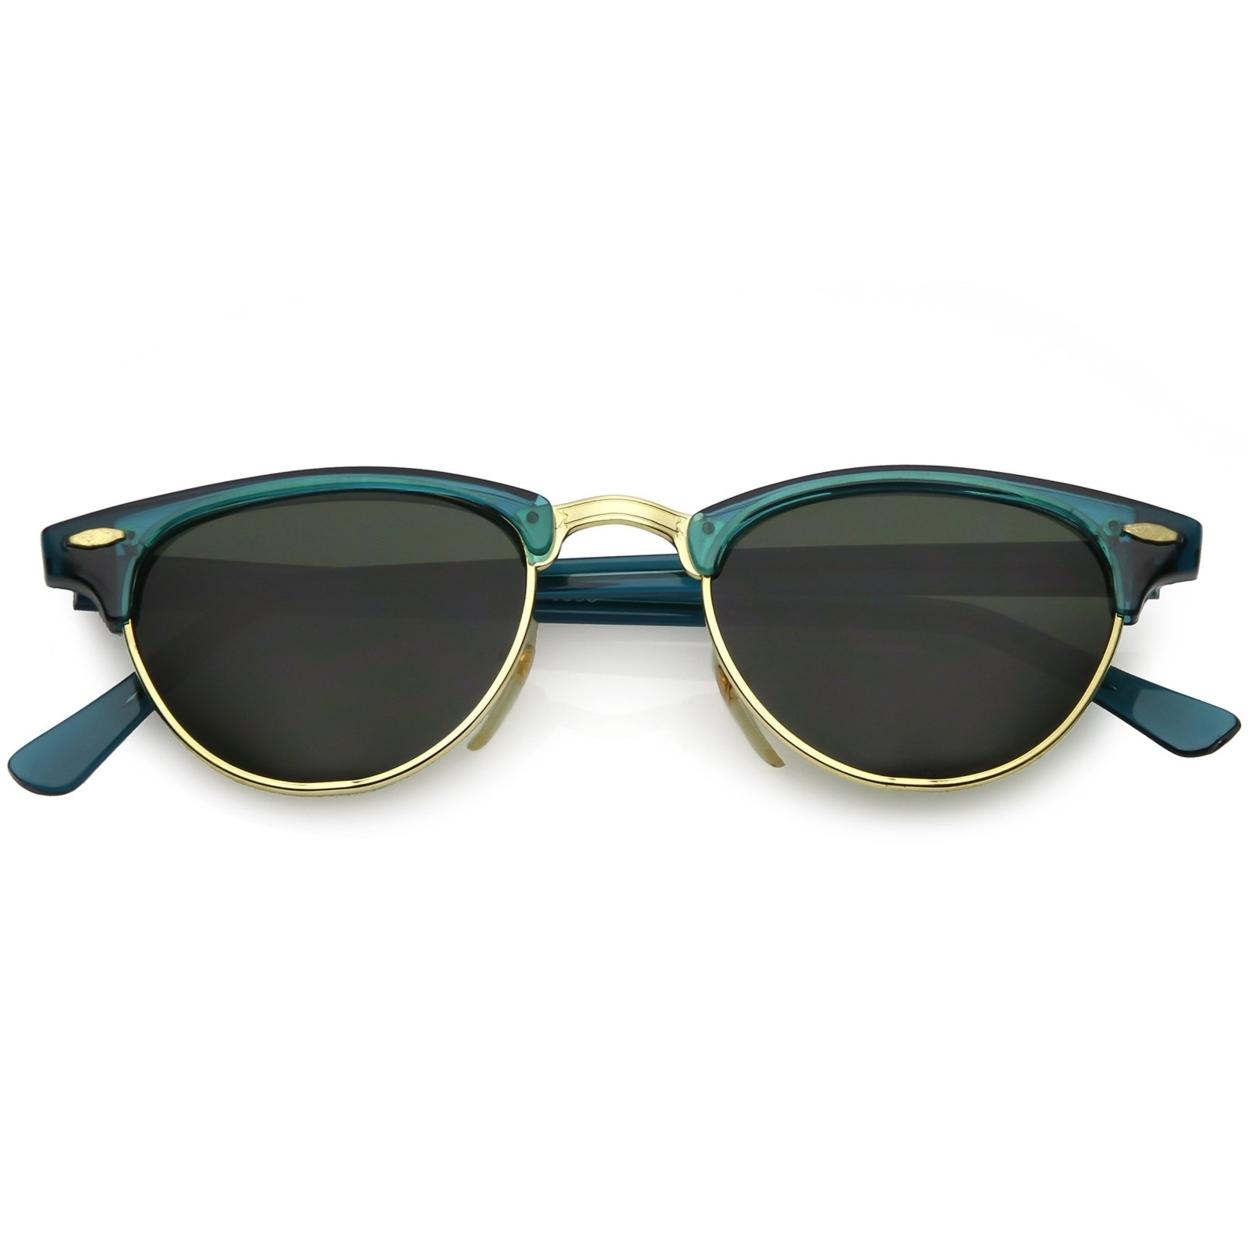 True Vintage Horn Rimmed Semi Rimless Sunglasses Green Tinted Oval Lens 49mm - Purple / Green